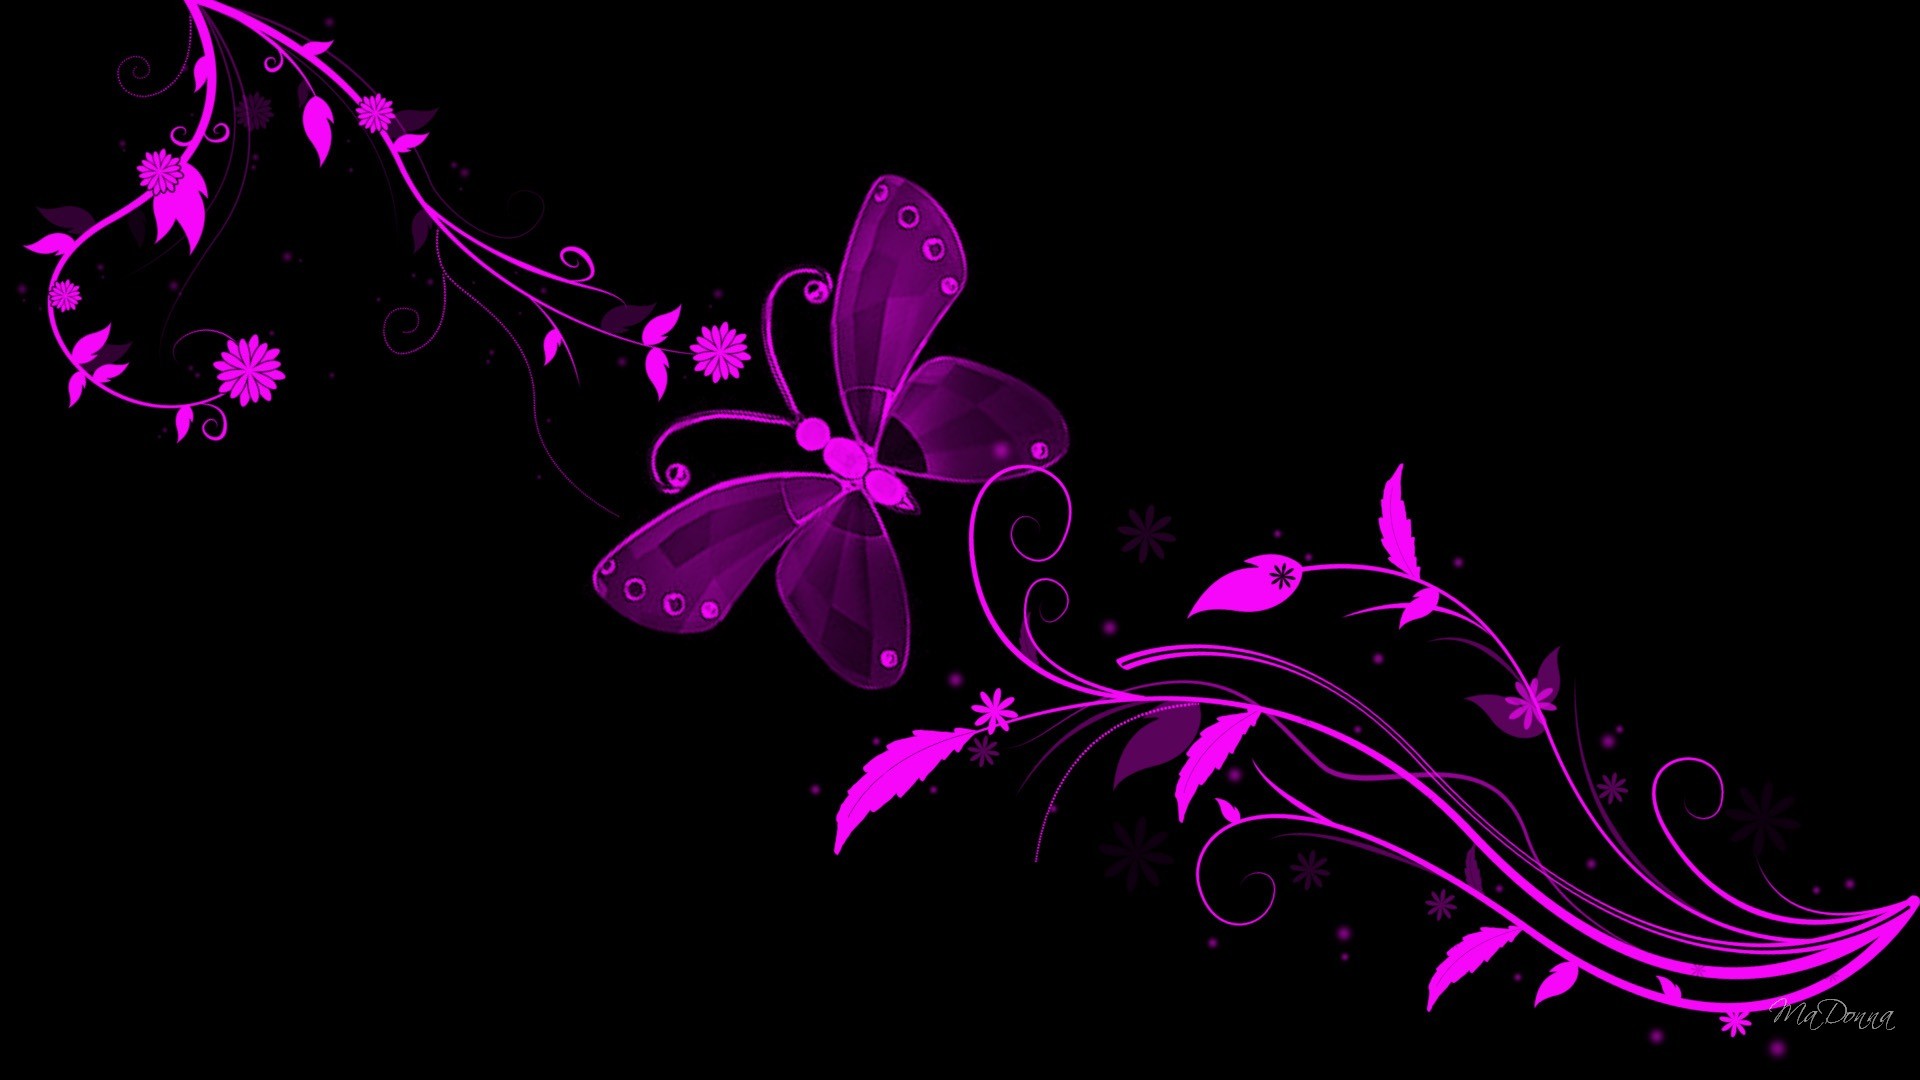 1920x1080 Black purple wallpaper hd abstract 24625 wallpaper hdwallsize com